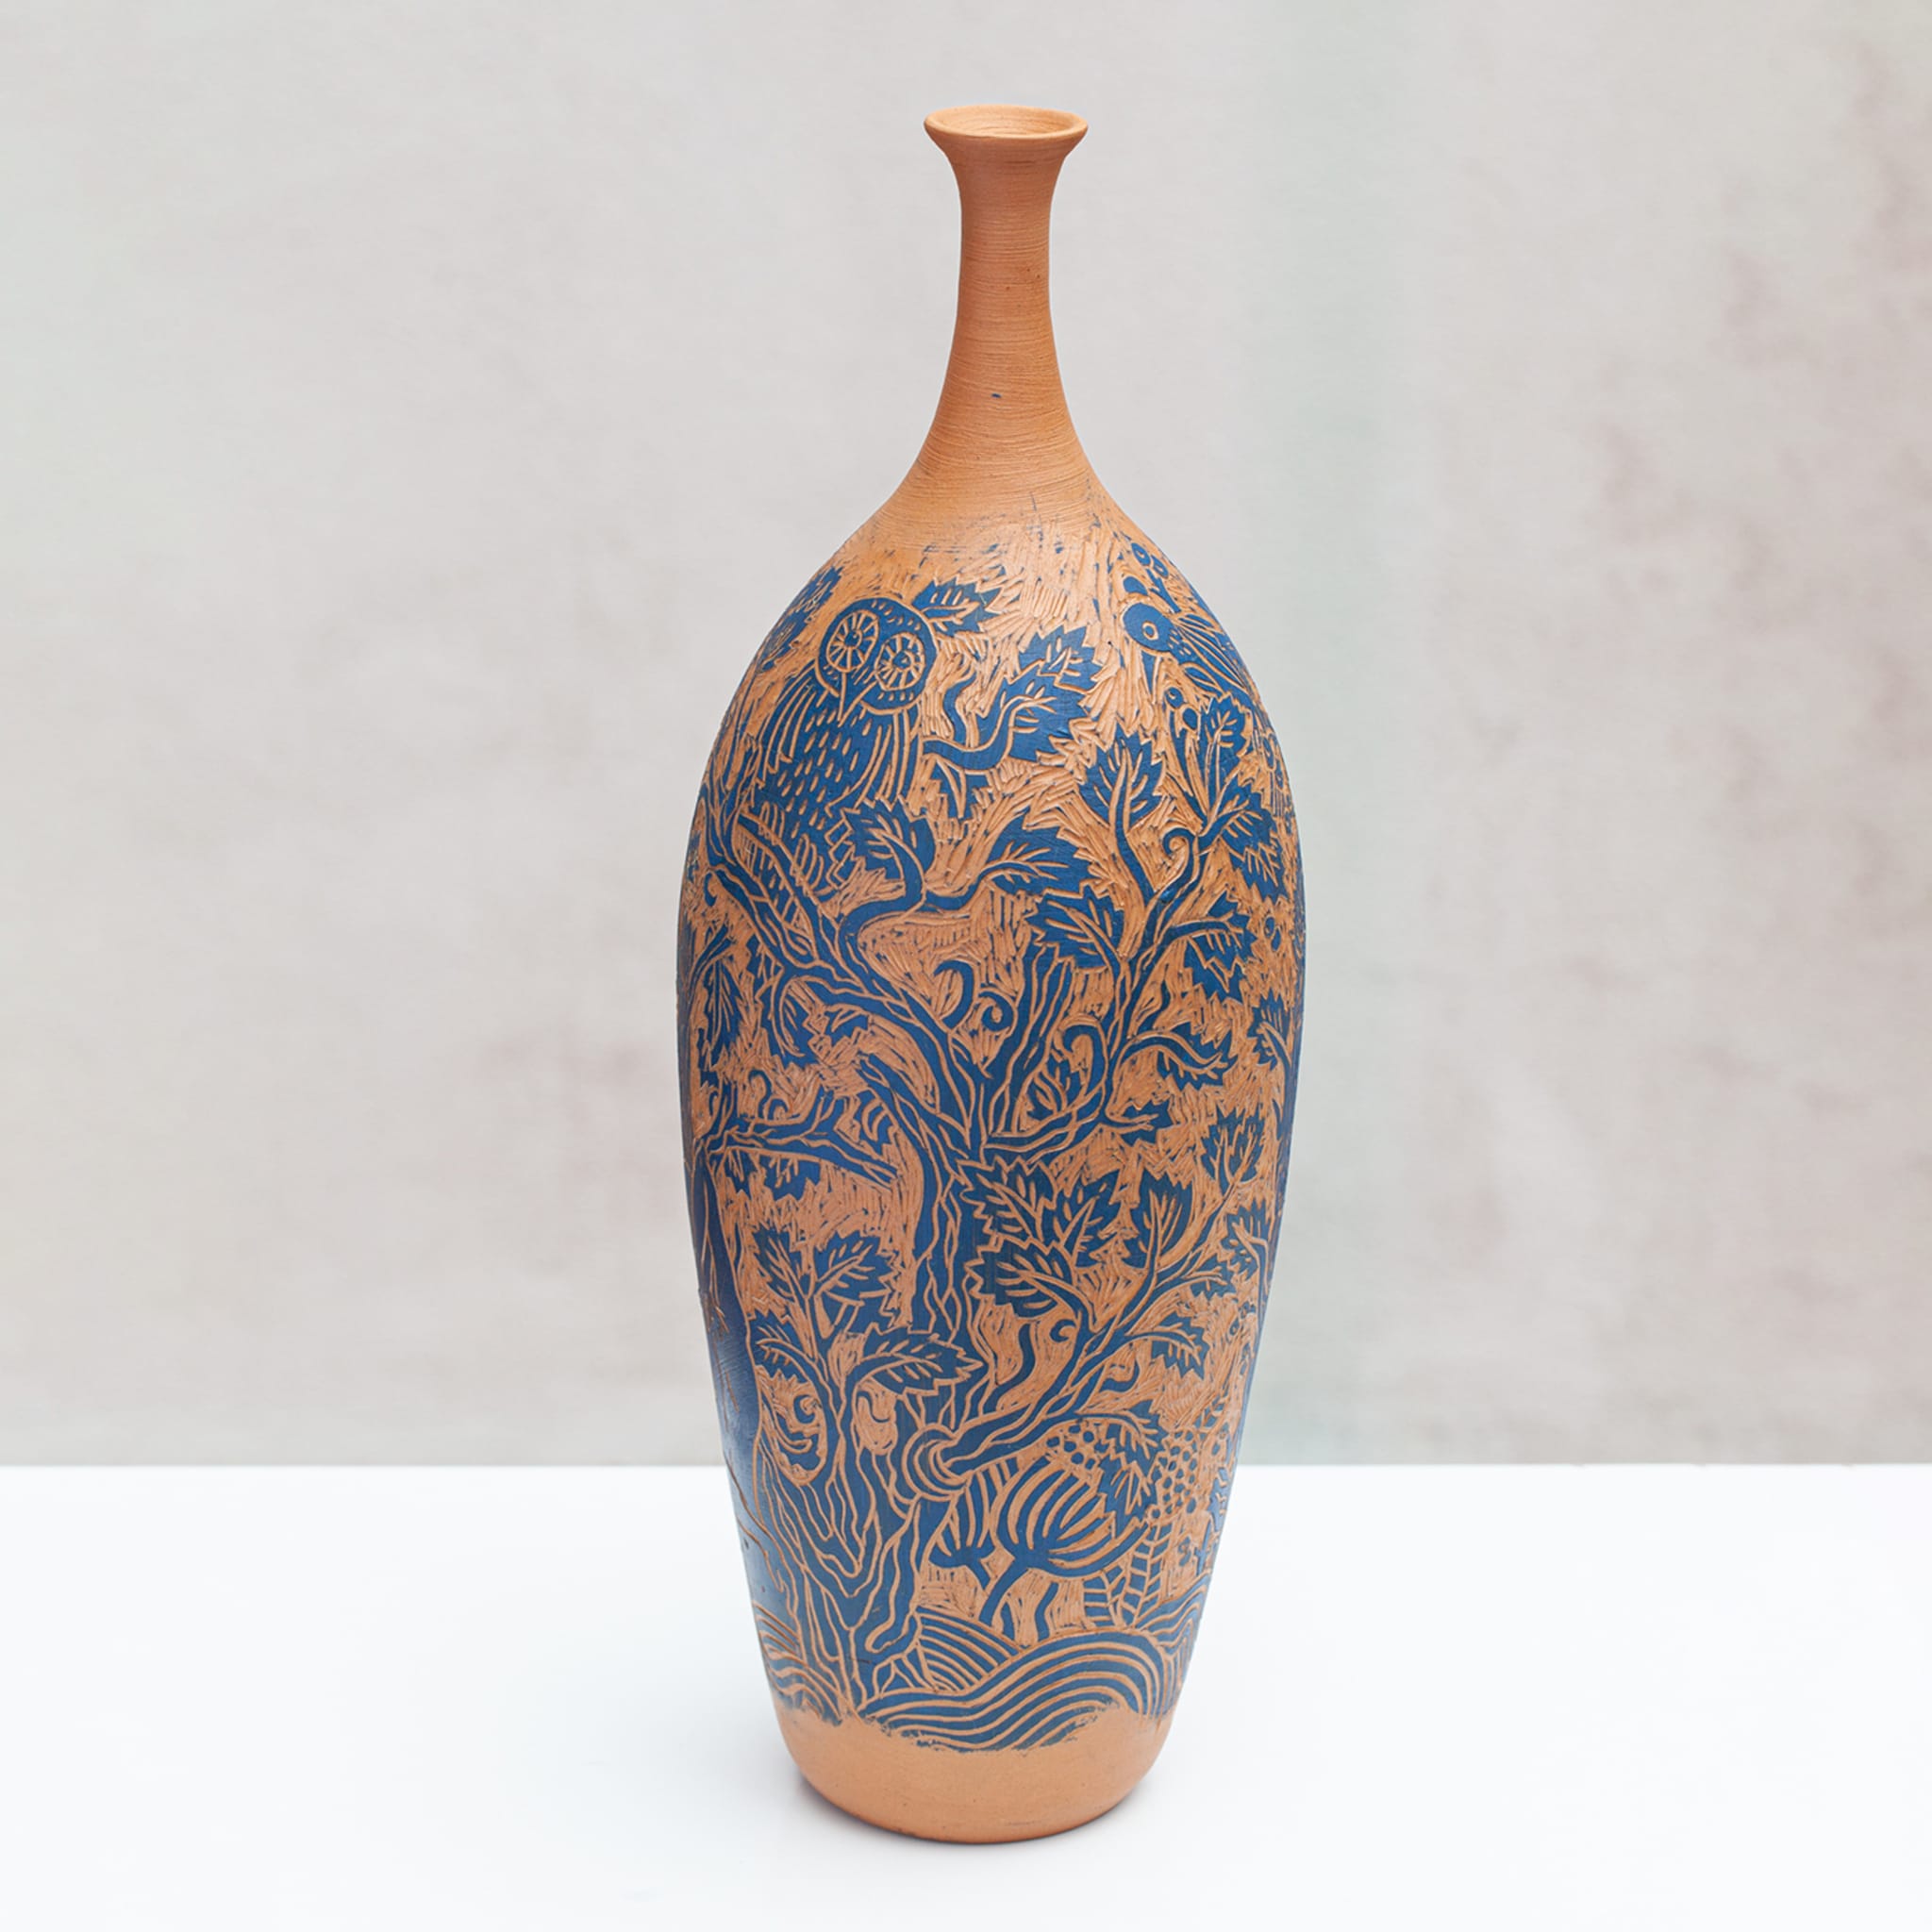 Aironi Heron Vase by Clara Holt and Chiara Zoppei - Alternative view 1